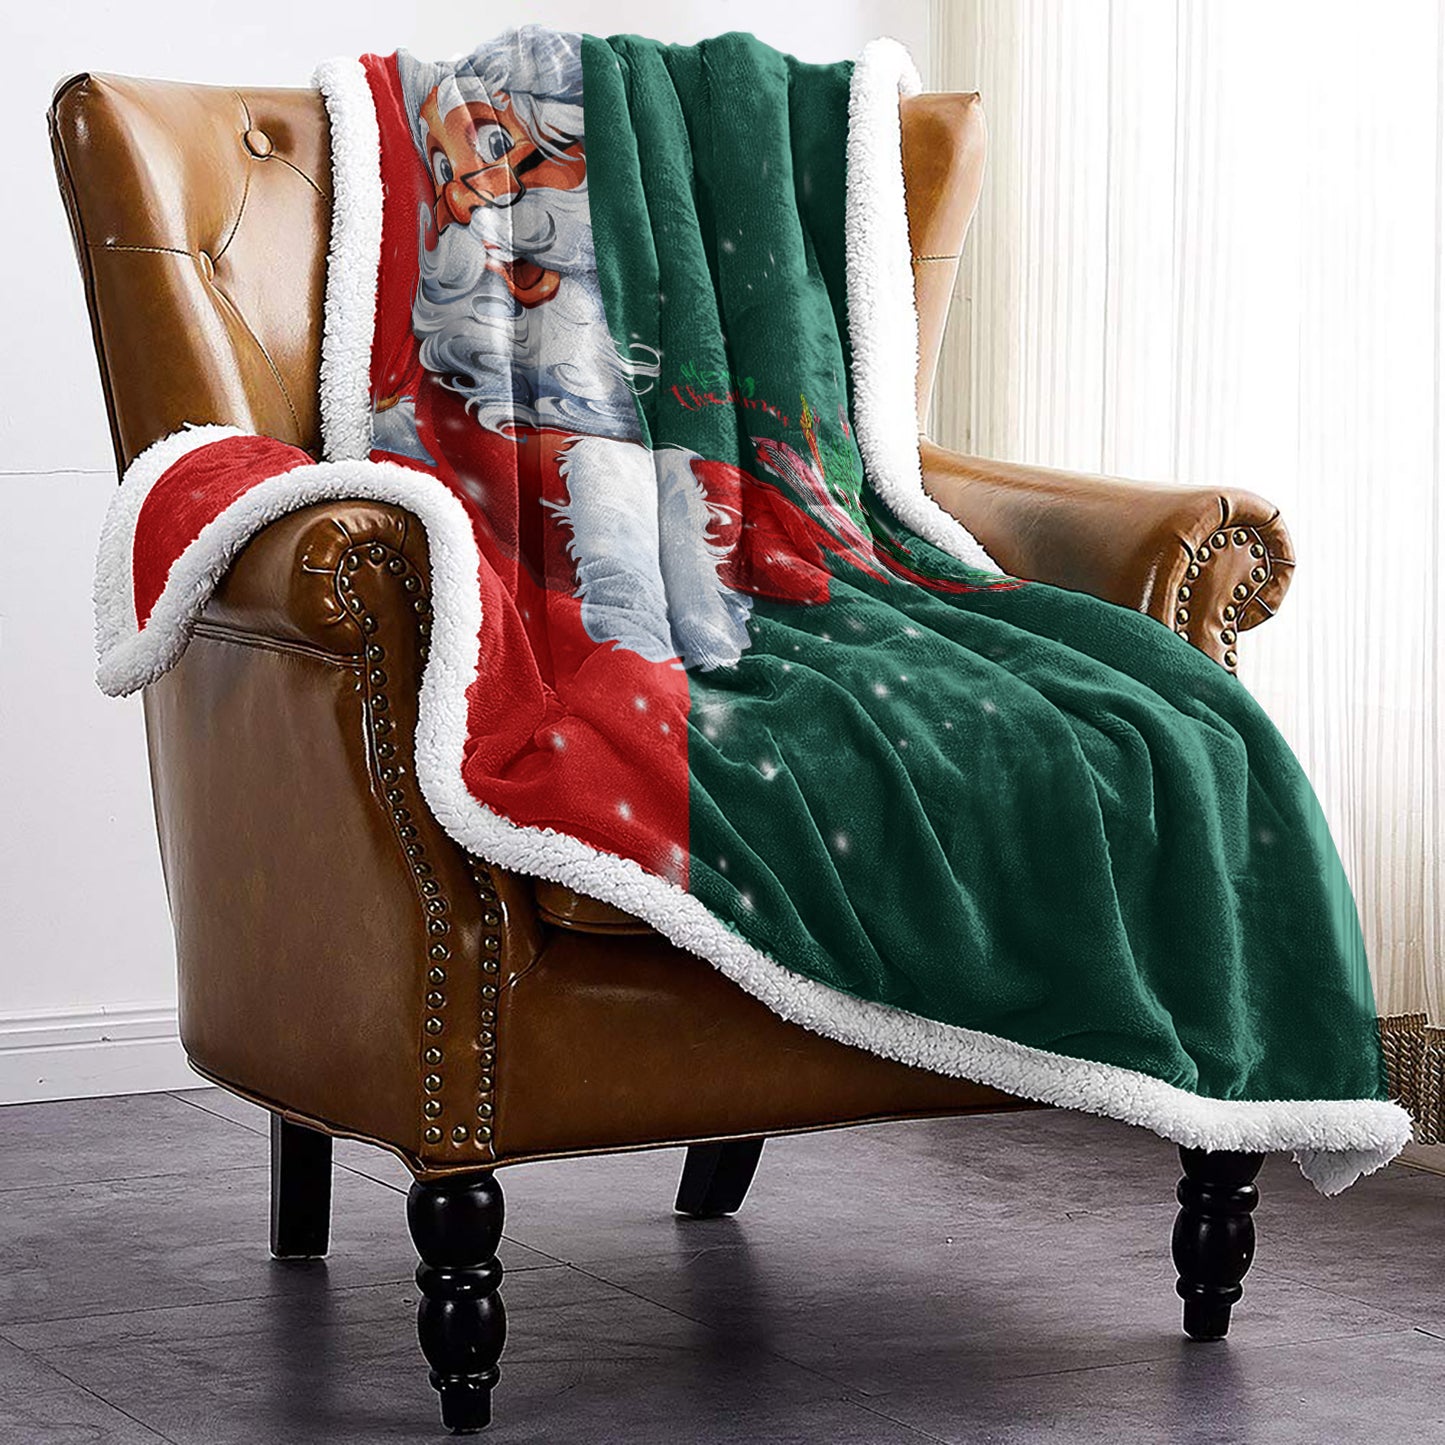 WONGS BEDDING Christmas Atmosphere Christmas Elements of Santa Blanket